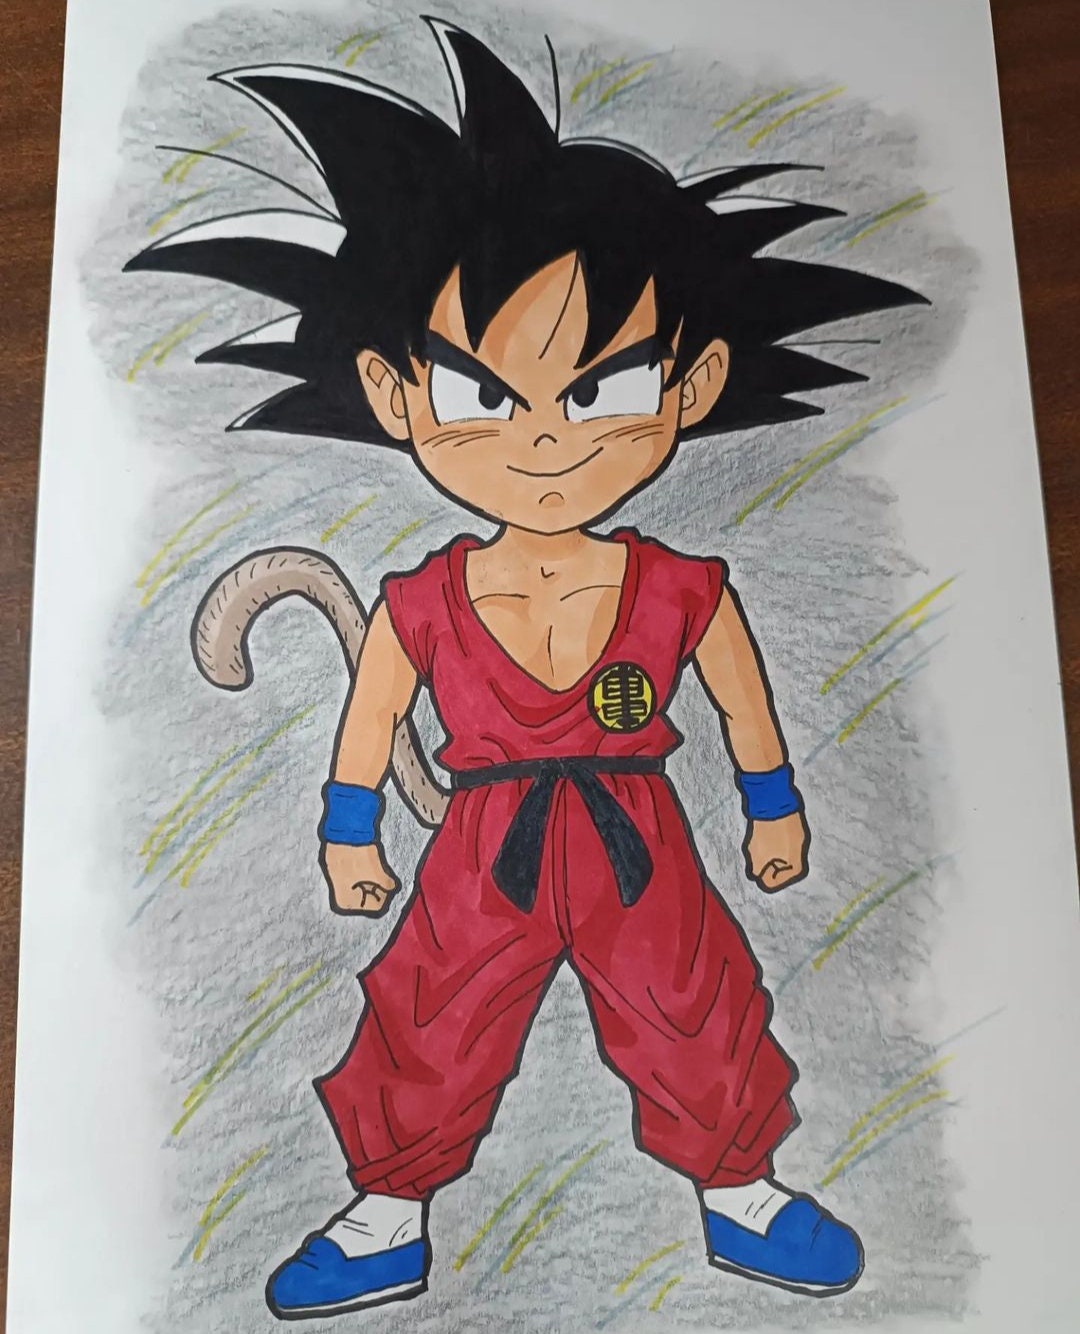 Goku drawing by MatchaSmoothii63 on DeviantArt